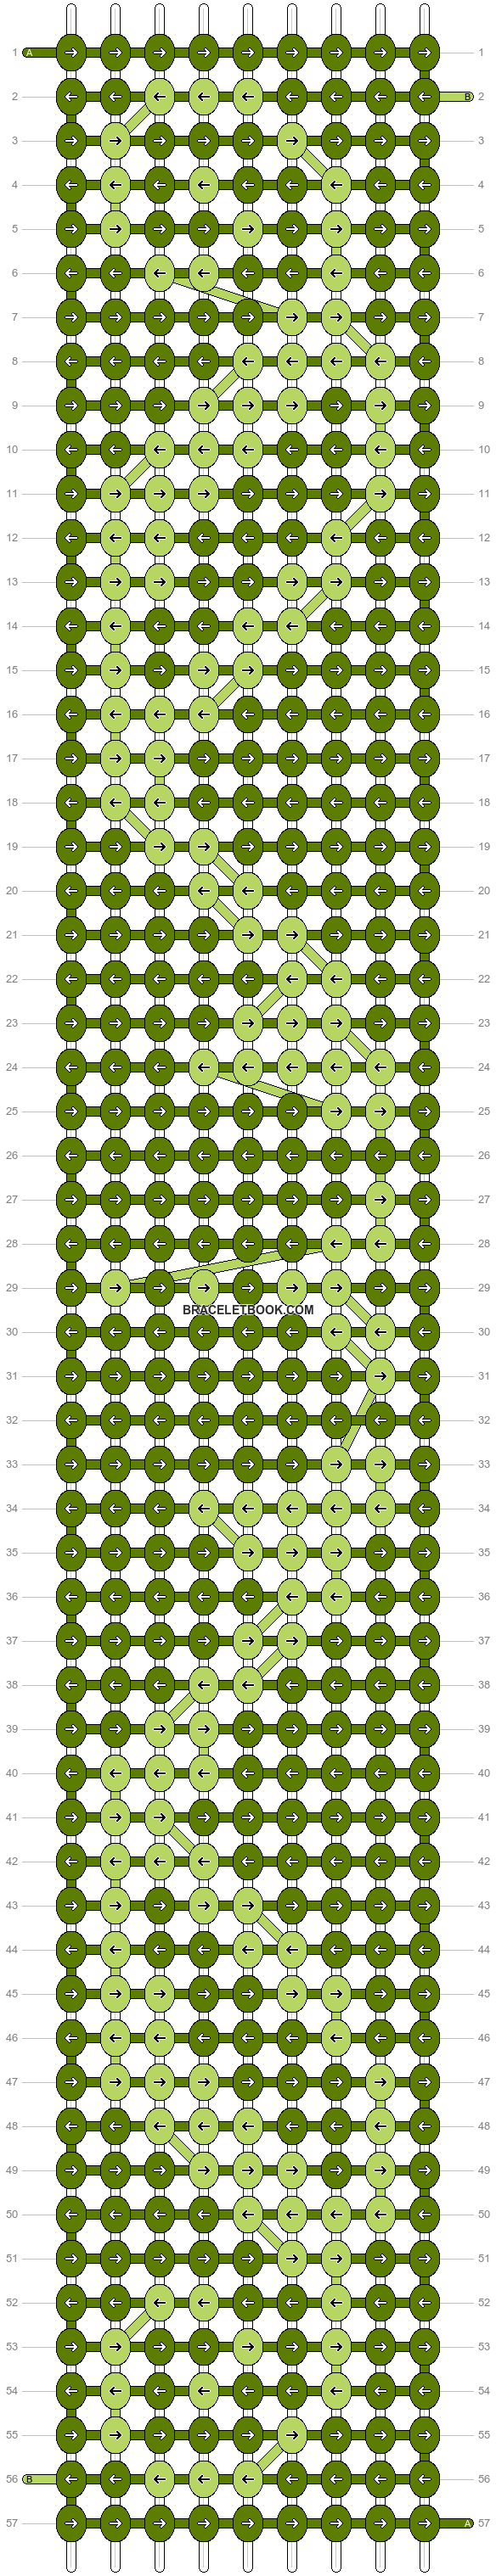 Alpha pattern #58261 variation #196306 pattern